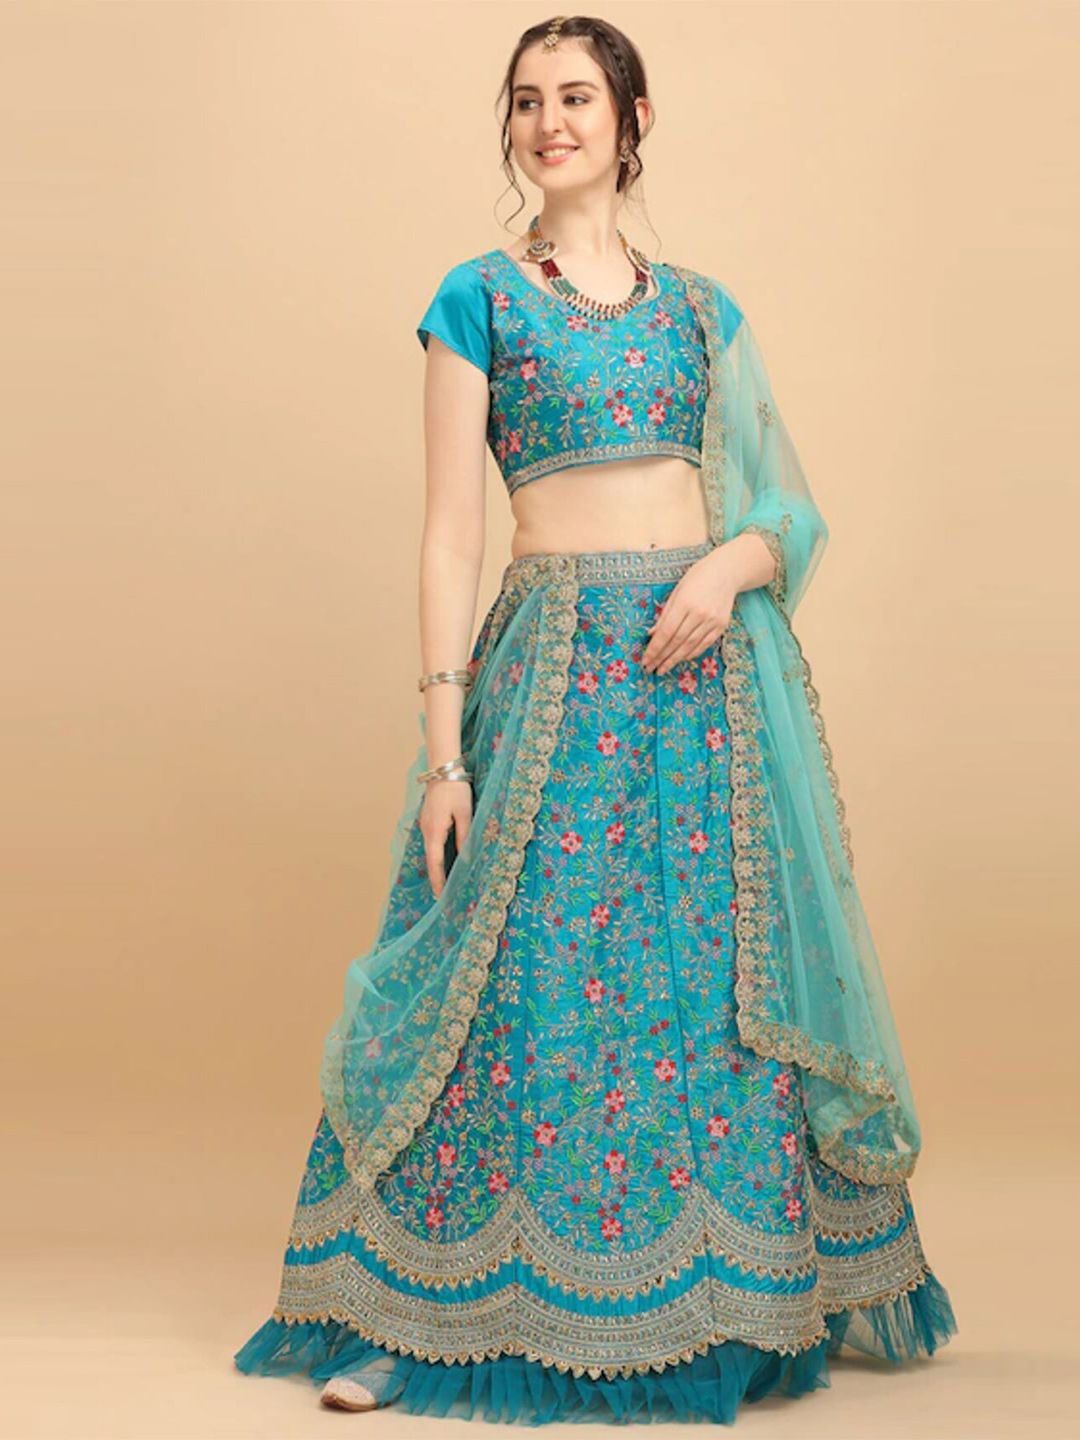 Zainab chottani Blue & Pink Embroidered Semi-Stitched Lehenga & Unstitched Blouse With Dupatta Price in India